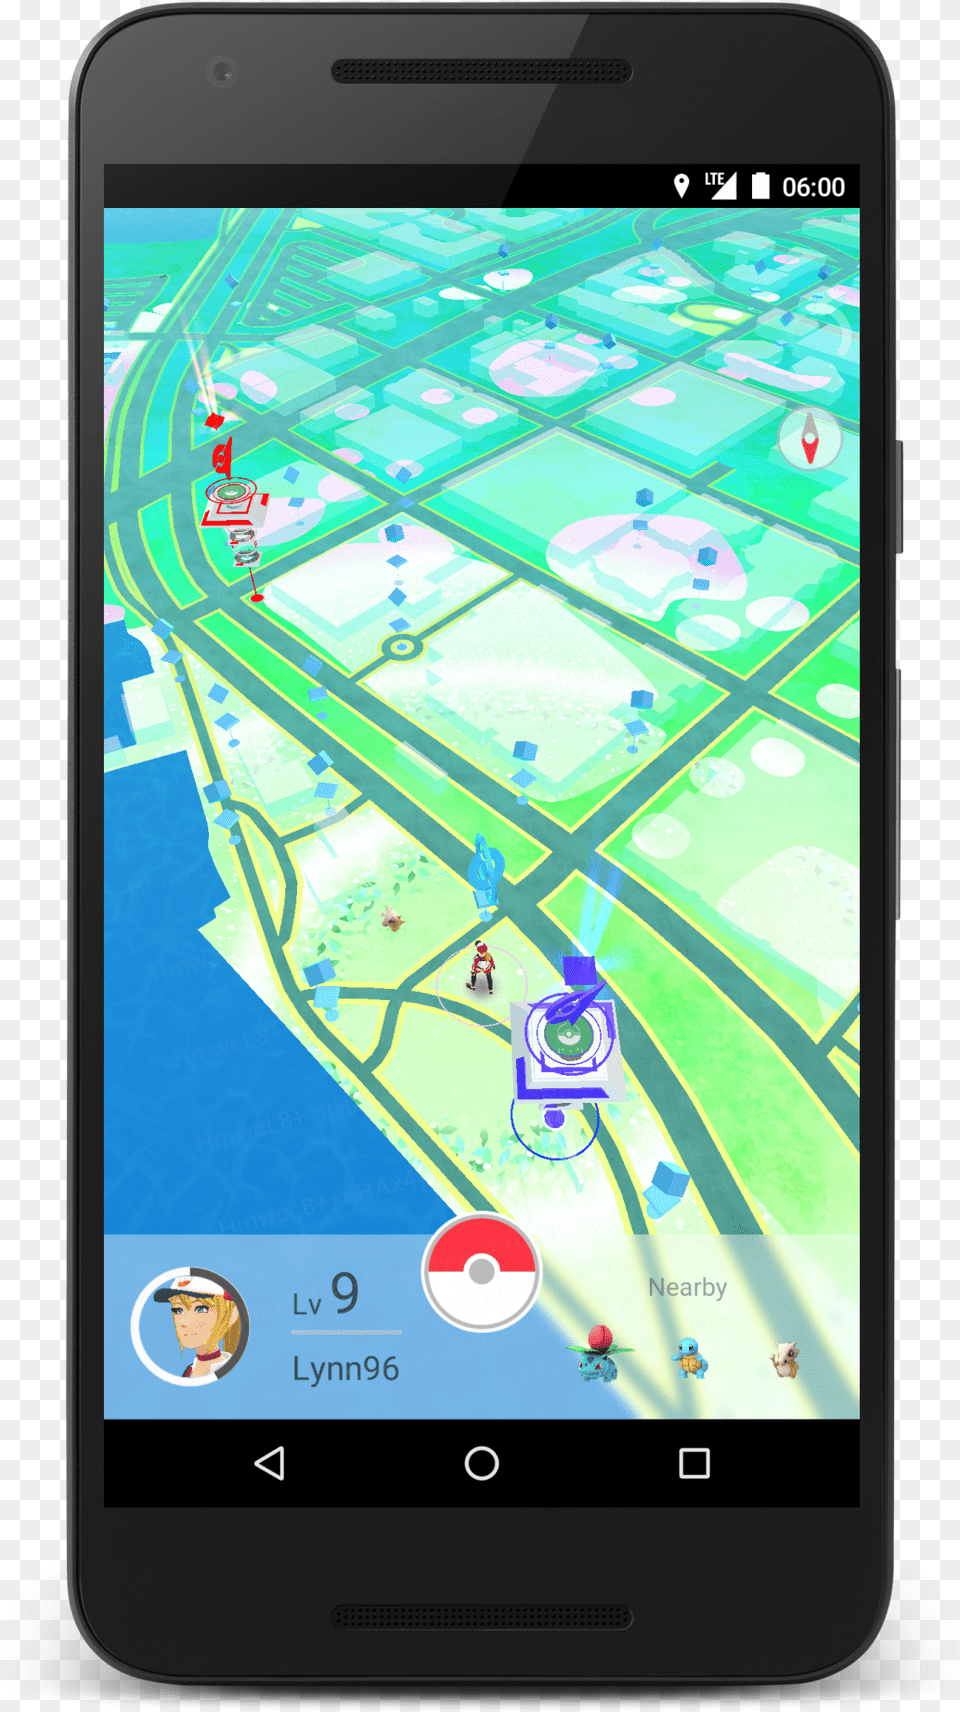 Gallery Wellington Pokemon Go Map, Electronics, Mobile Phone, Phone, Gps Png Image